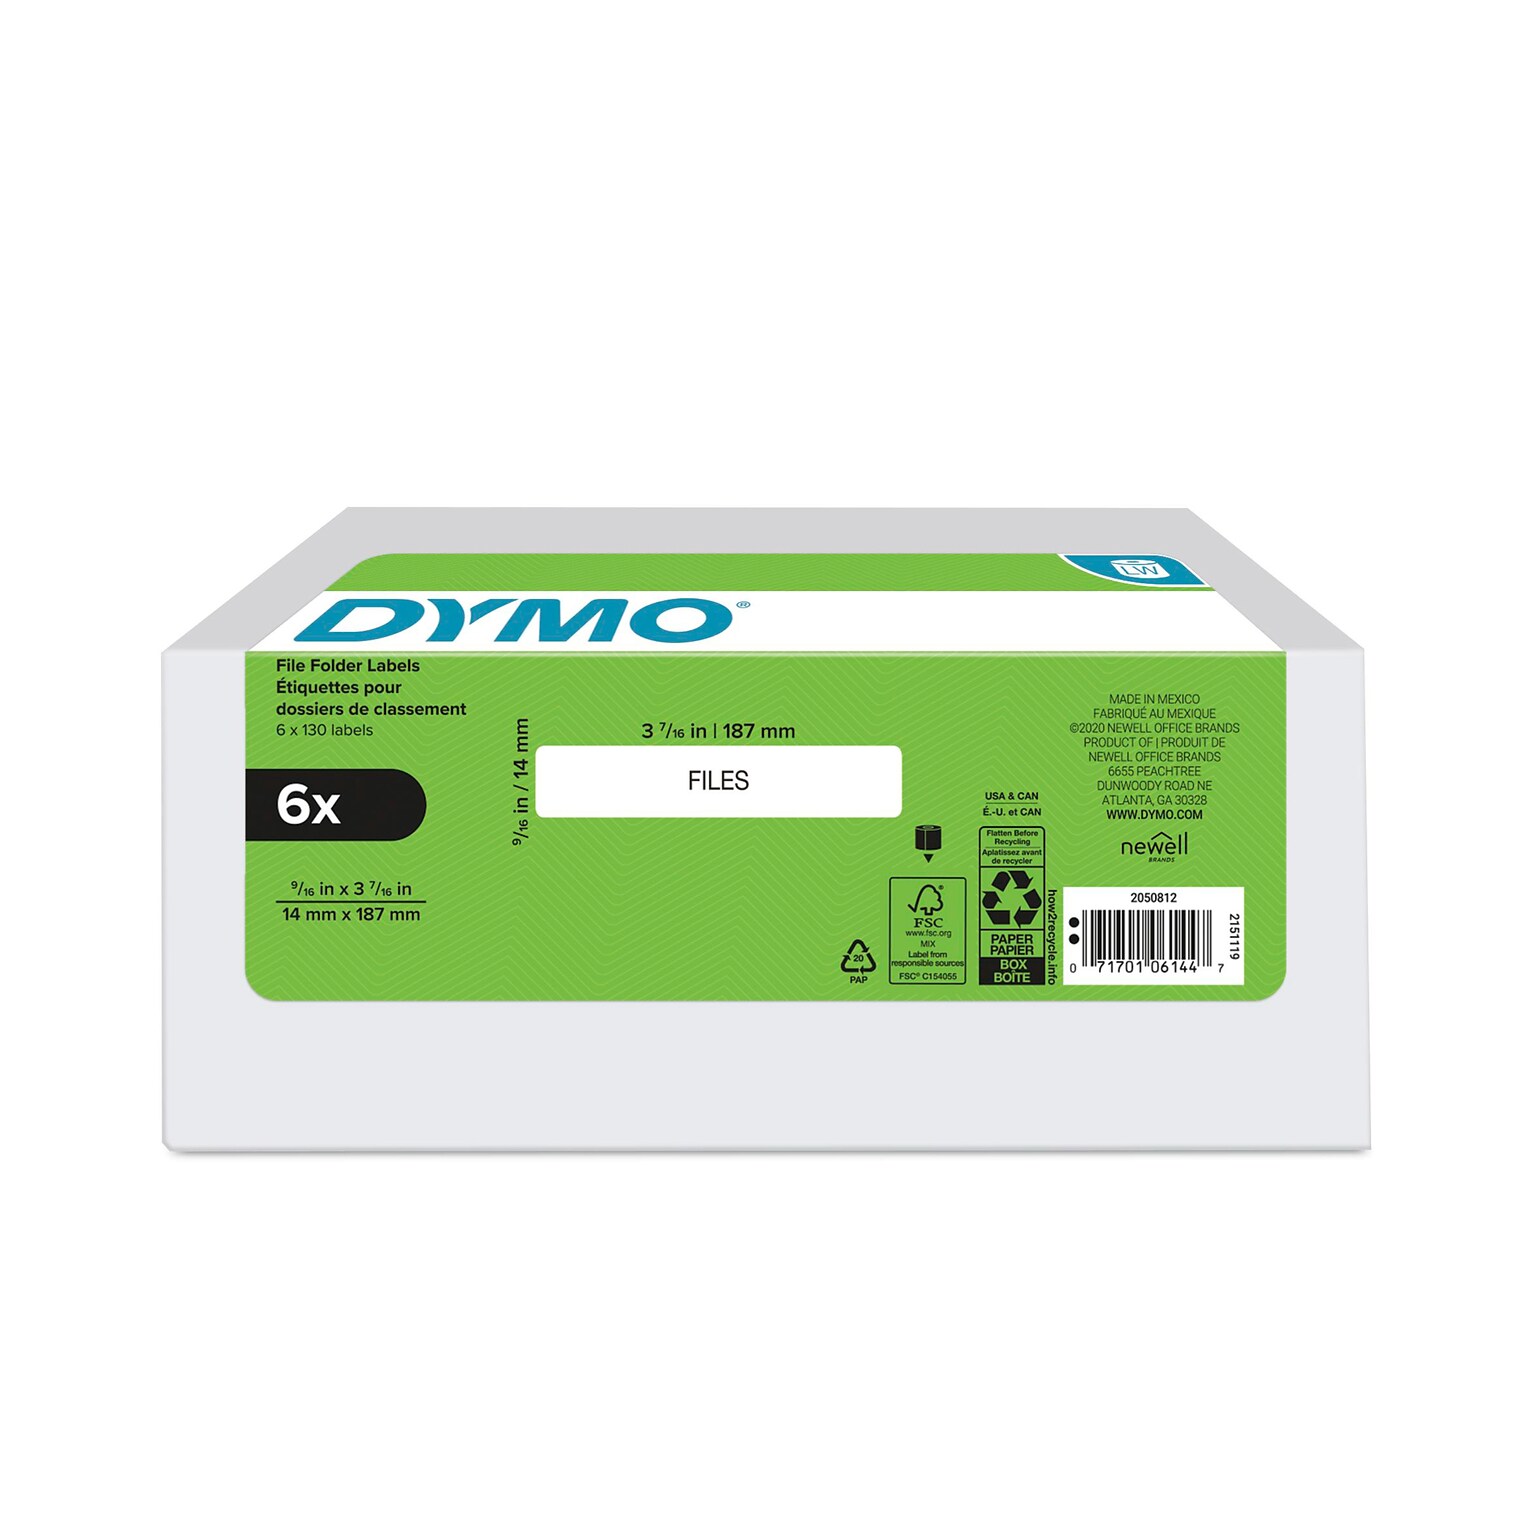 DYMO LabelWriter 2050812 File Folder Labels, 3-7/16 x 9/16, Black on White, 130 Labels/Roll, 6 Rolls/Box (2050812)